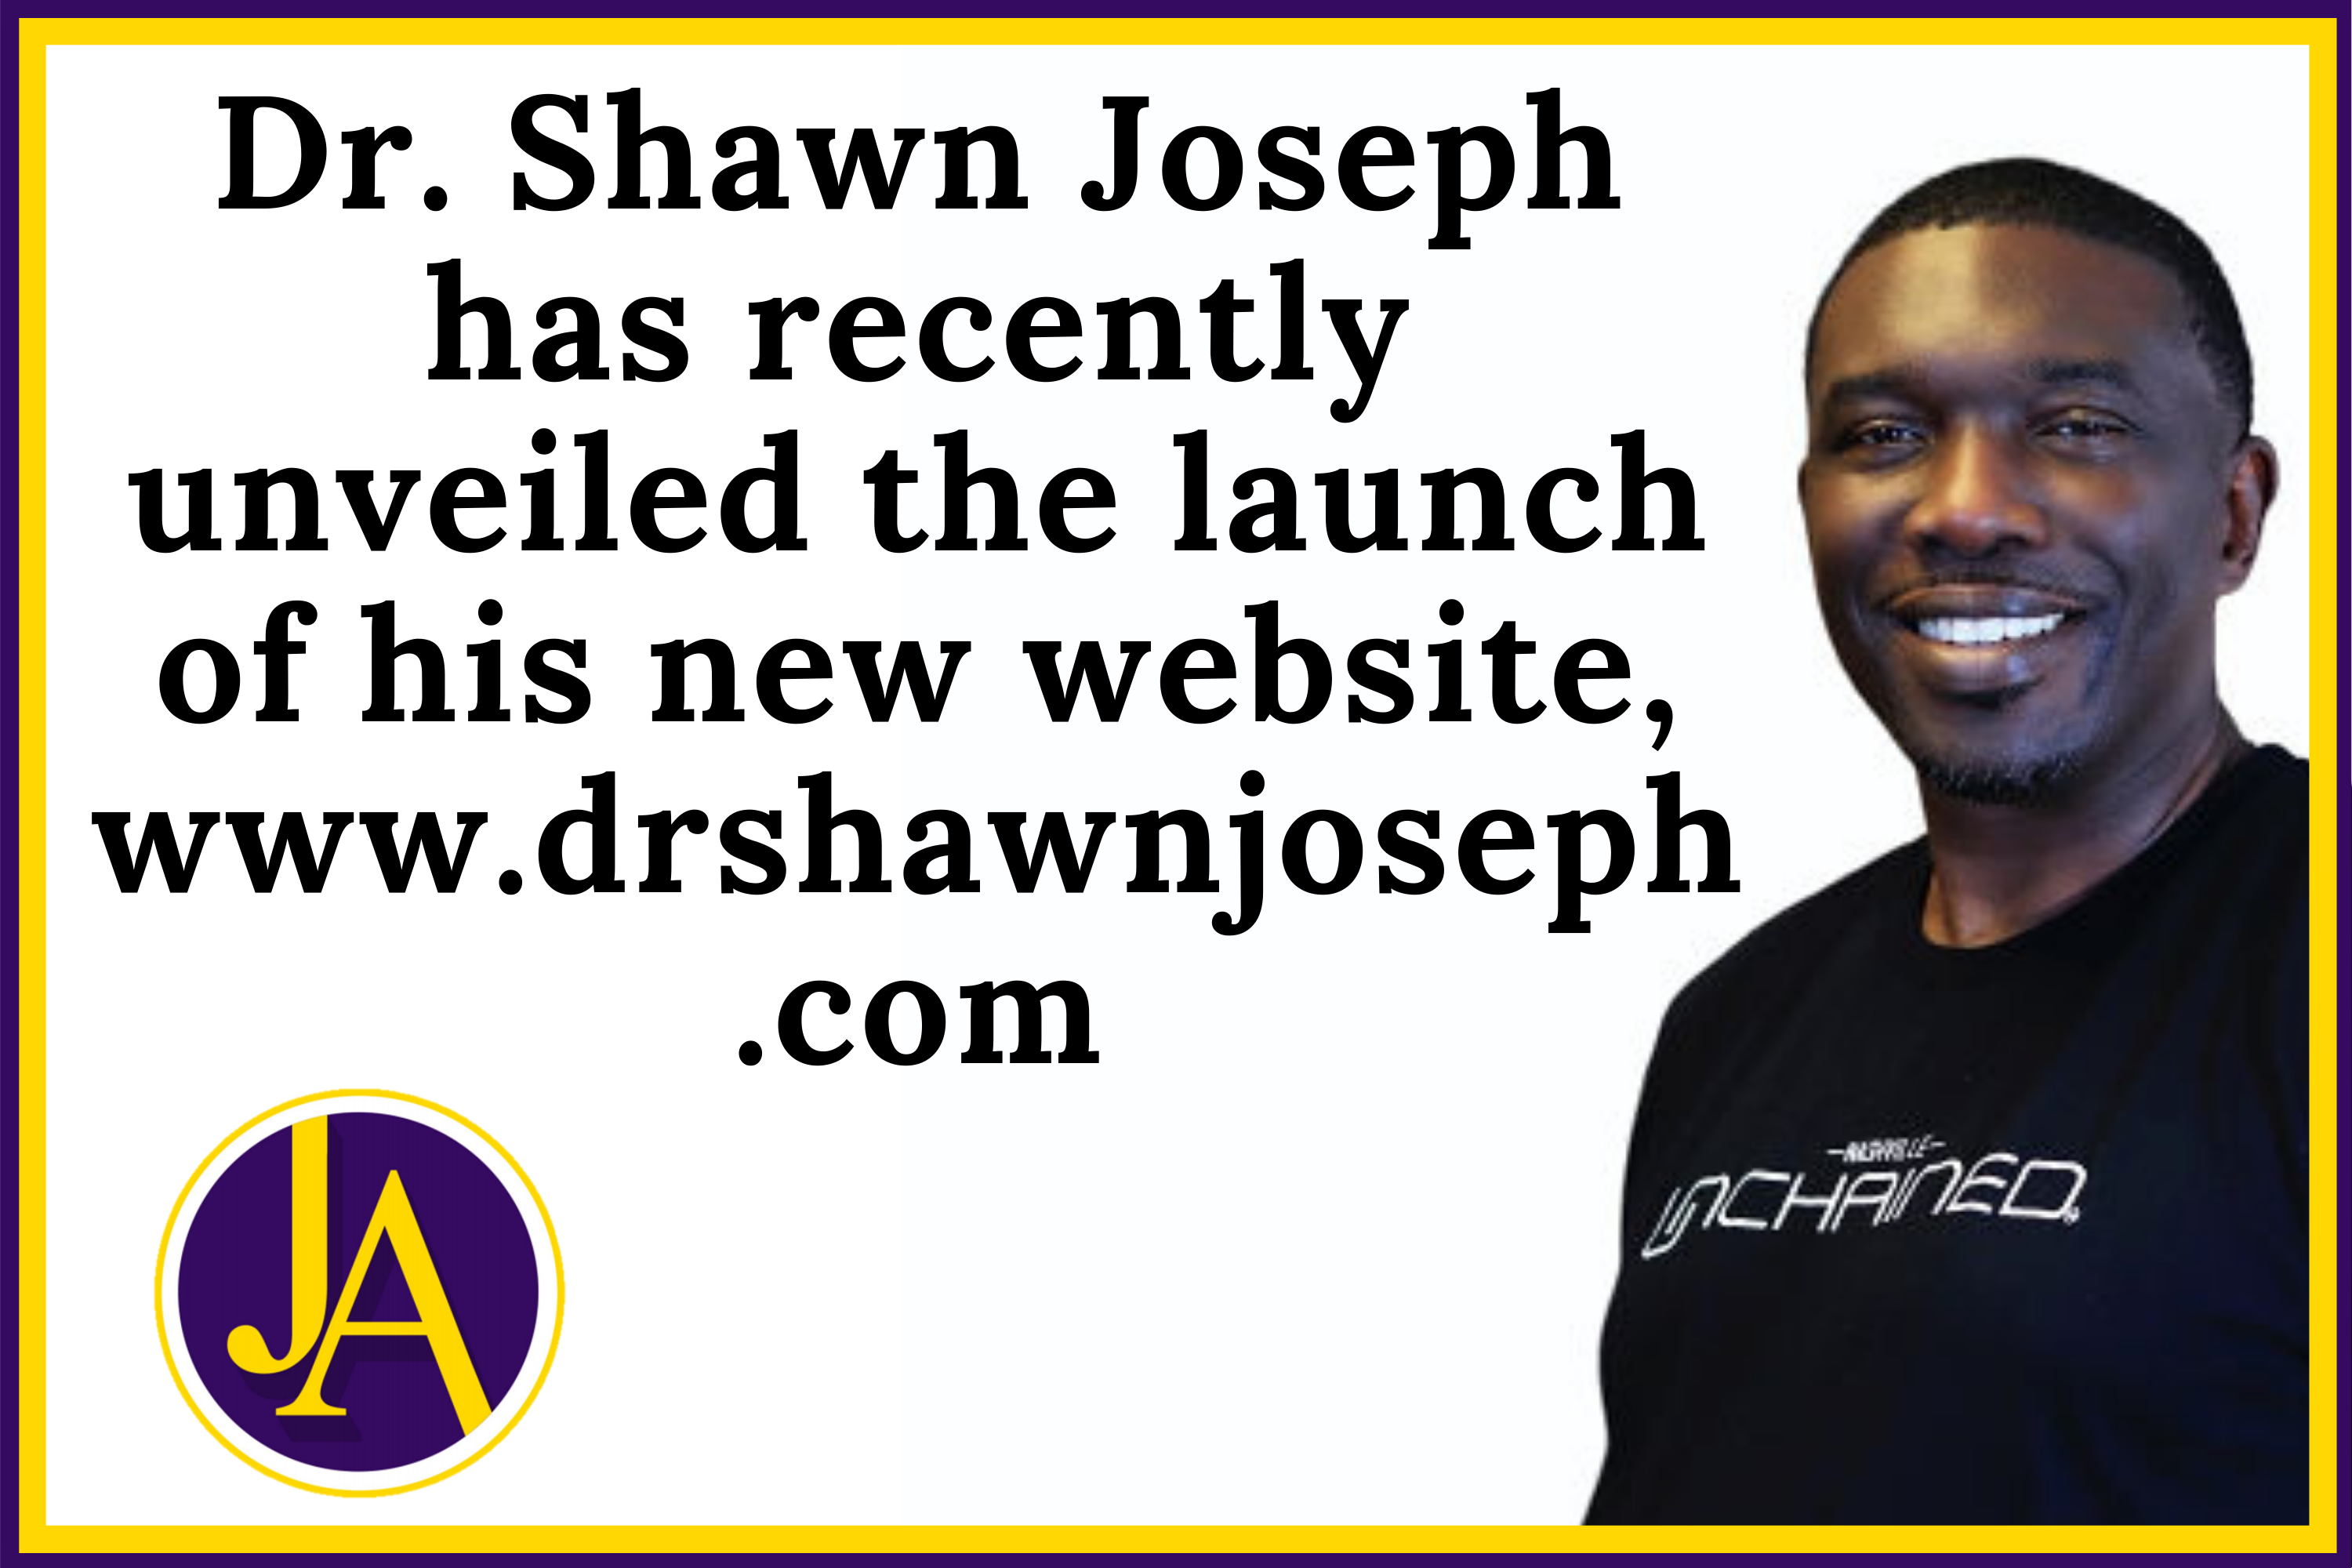 Dr. Shawn Joseph, Monday, March 1, 2021, Press release picture